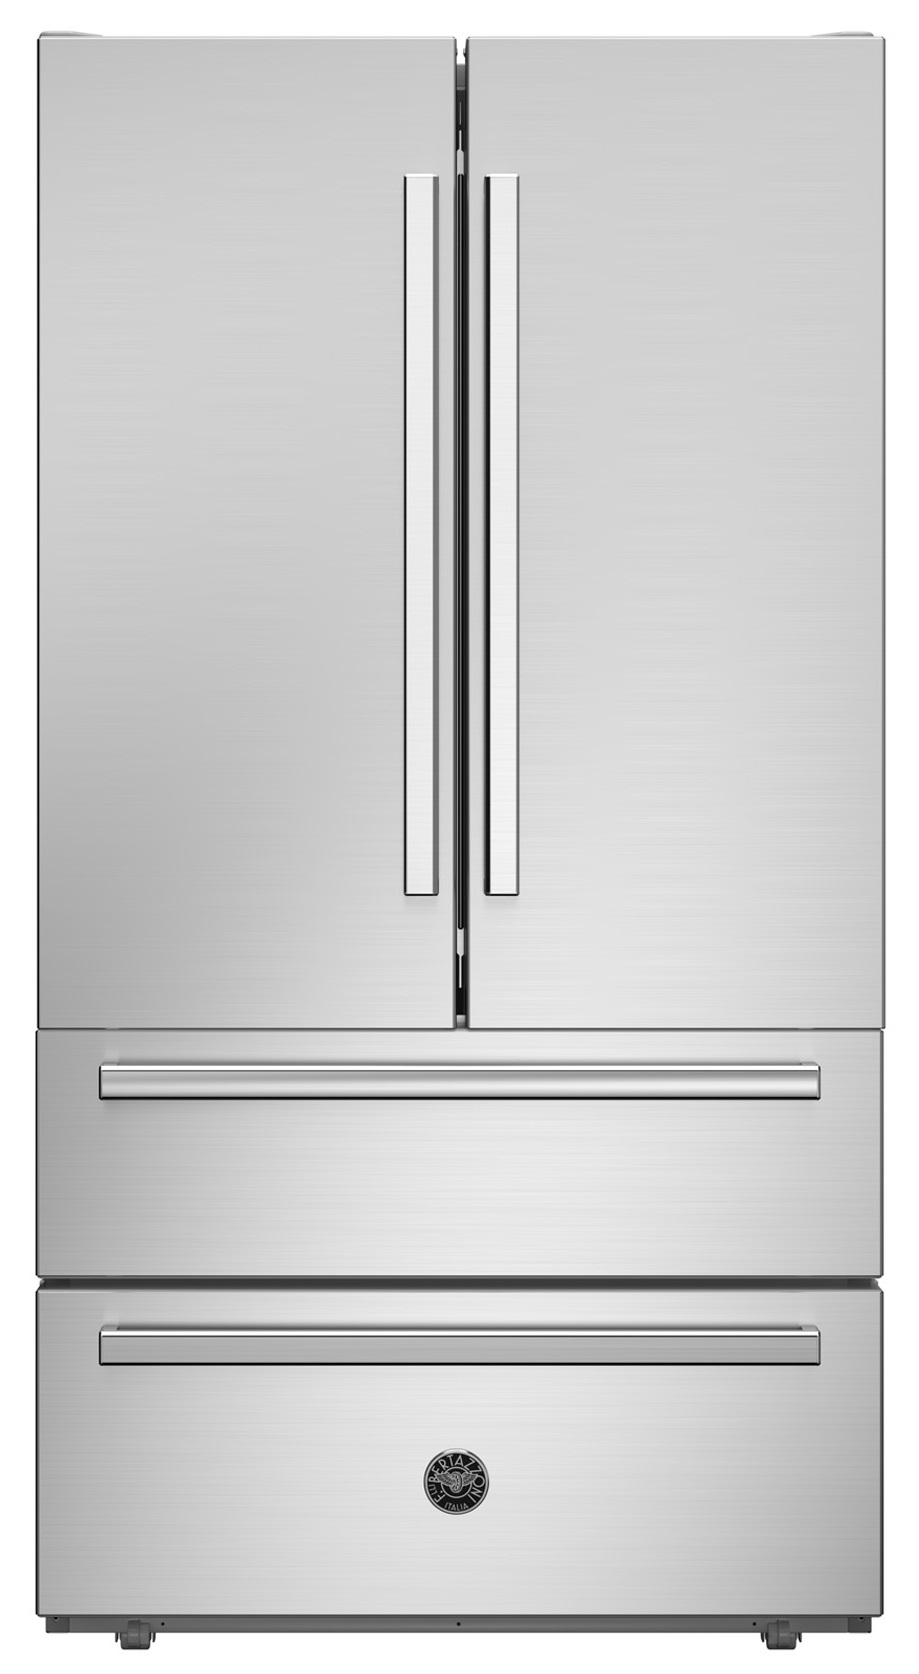 Холодильник Betazzoni REF904FFNXTC